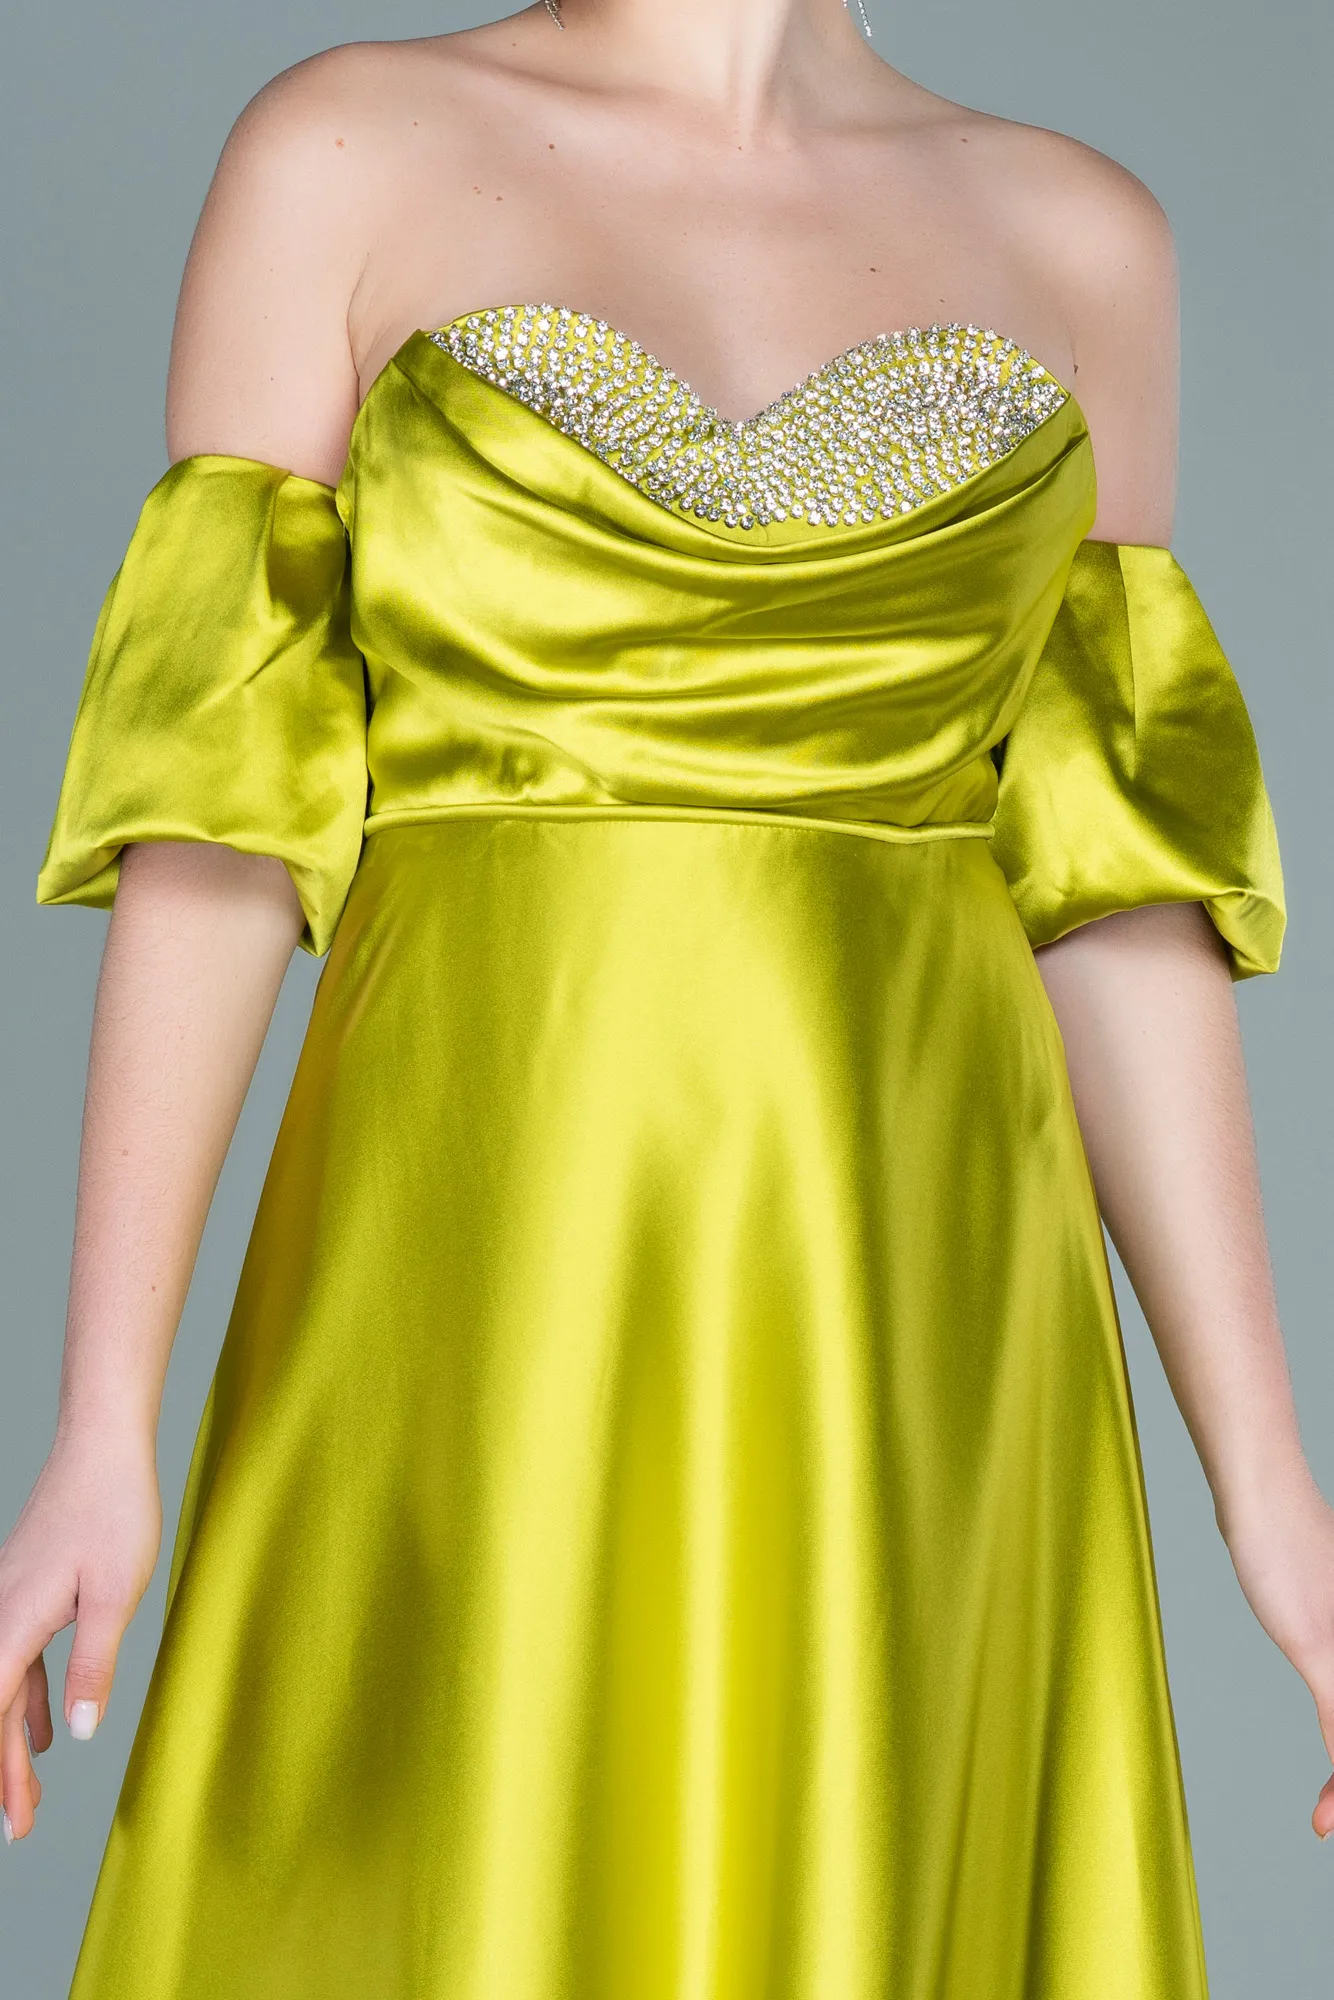 Pistachio Green-Long Satin Evening Dress ABU2614